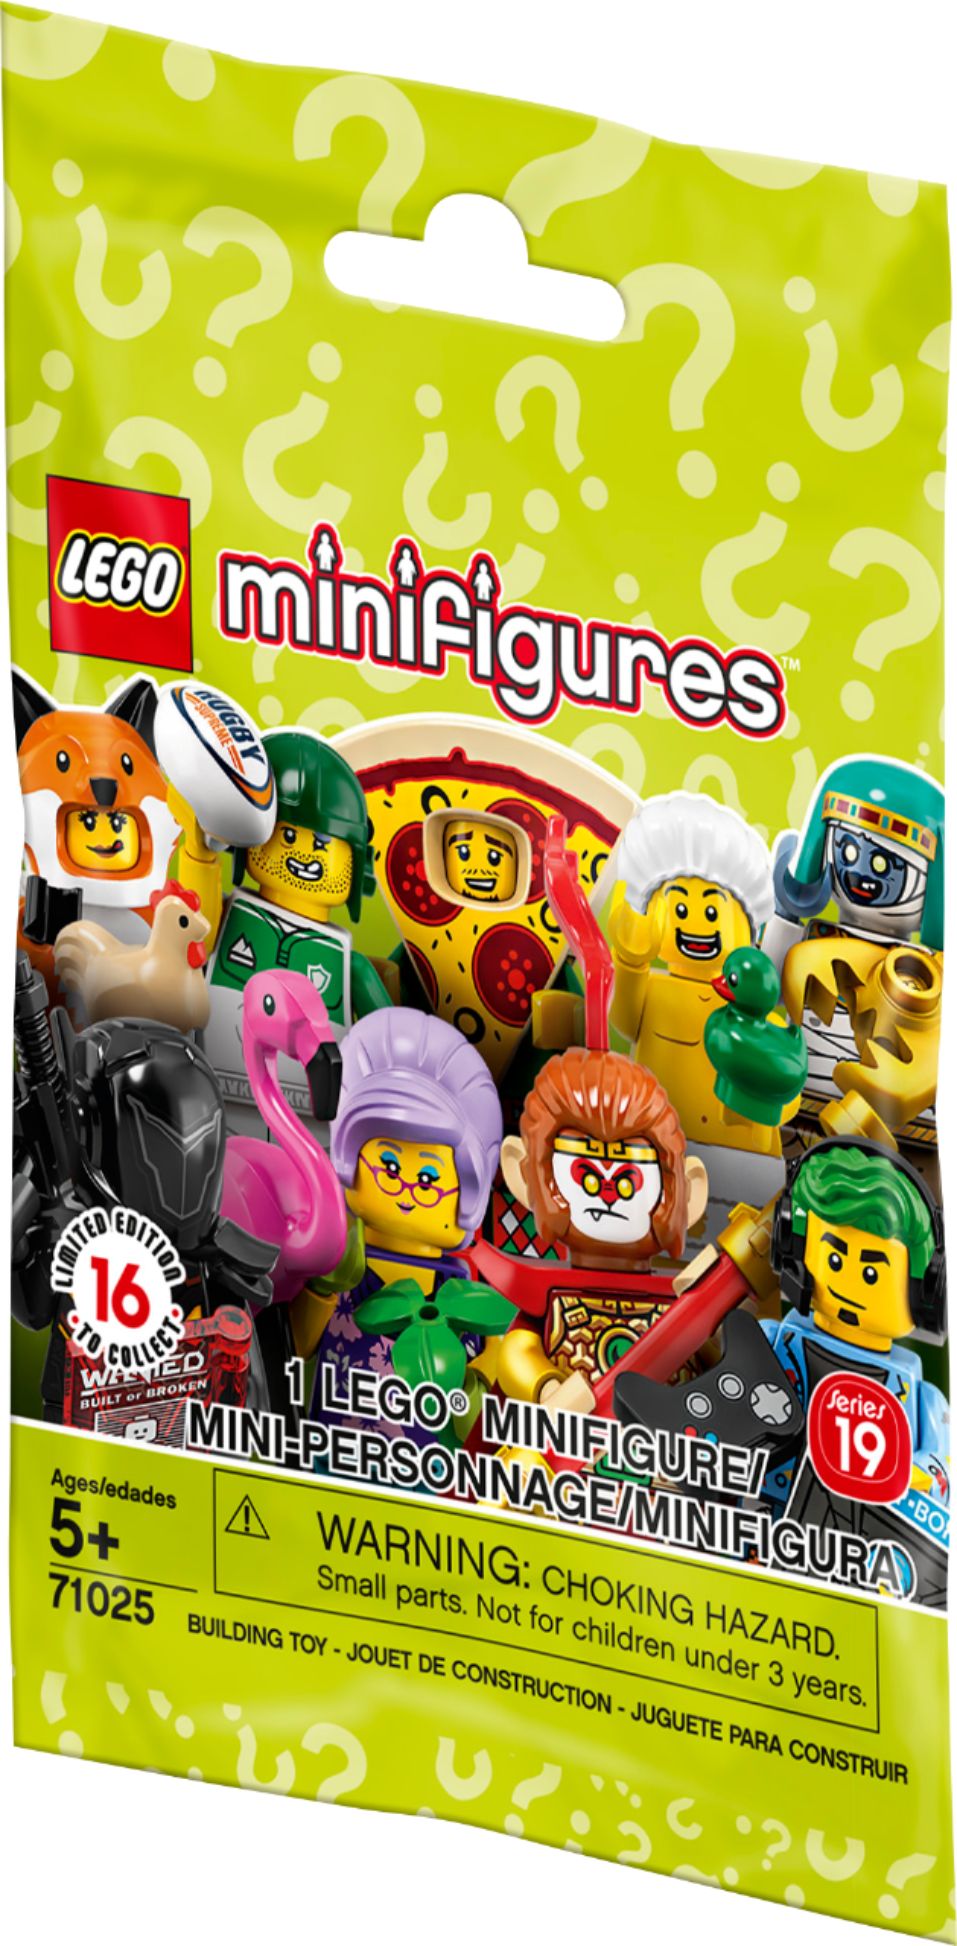 LEGO Series 19 Minifigure 71025 Blind Box